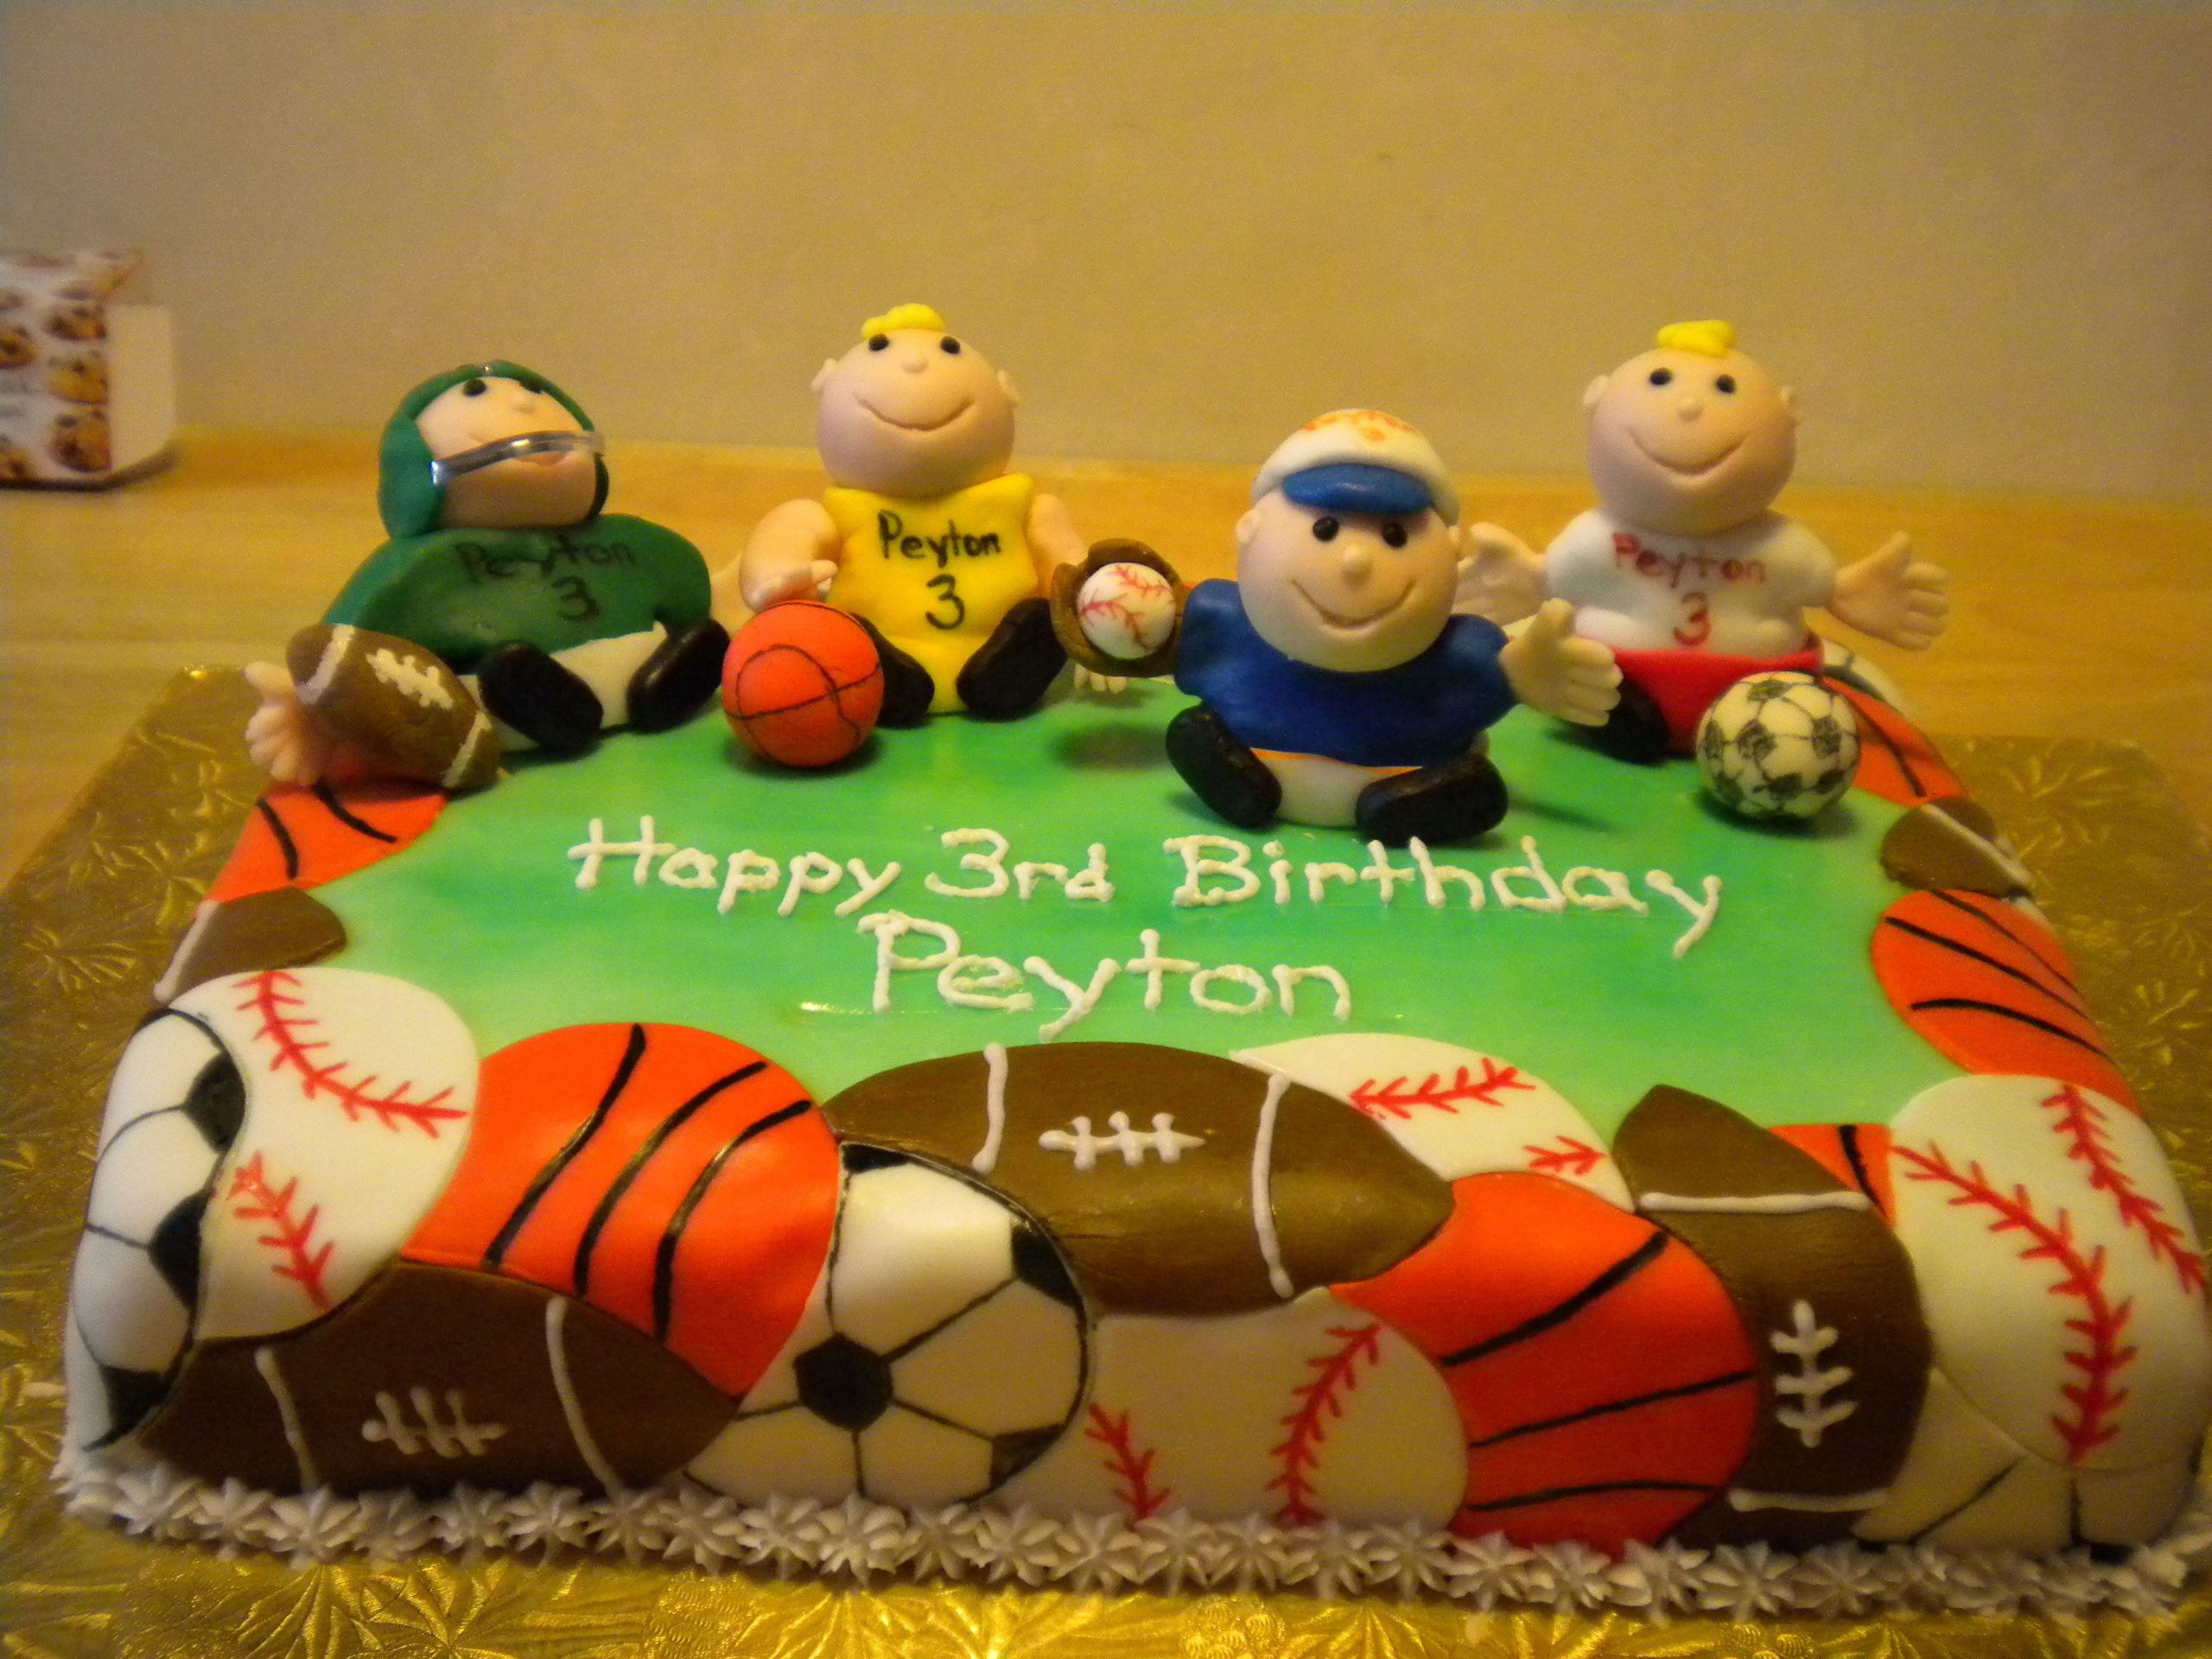 Sports Themed Birthday Cakes
 Sports themed birthday cake